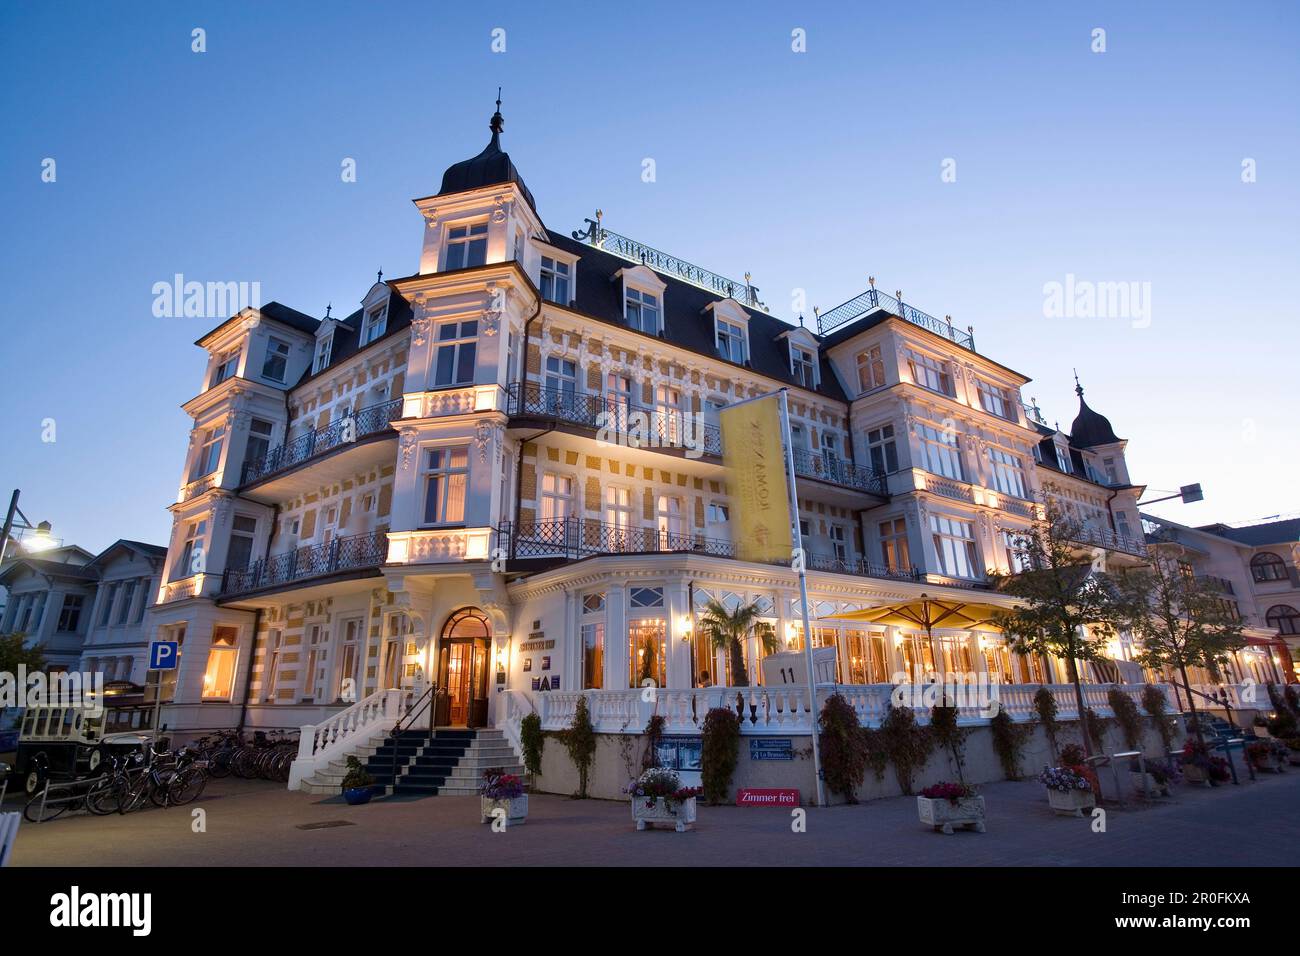 Hotel Ahlbecker Hof, Ahlbeck, Usedom island, Mecklenburg-Western Pomerania, Germany Stock Photo